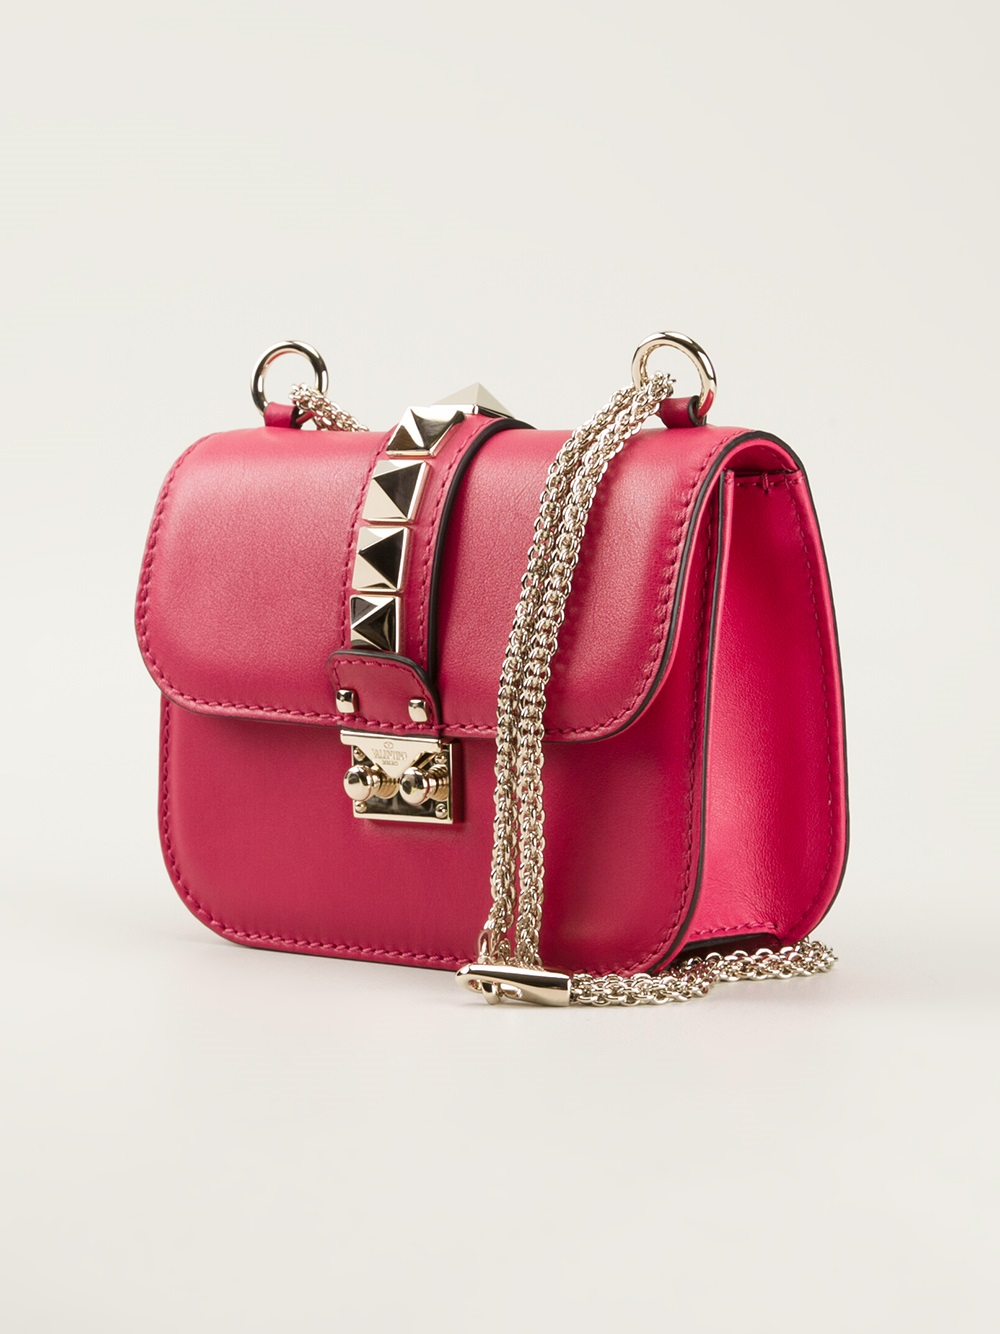 Lyst - Valentino Glam Lock Shoulder Bag in Pink